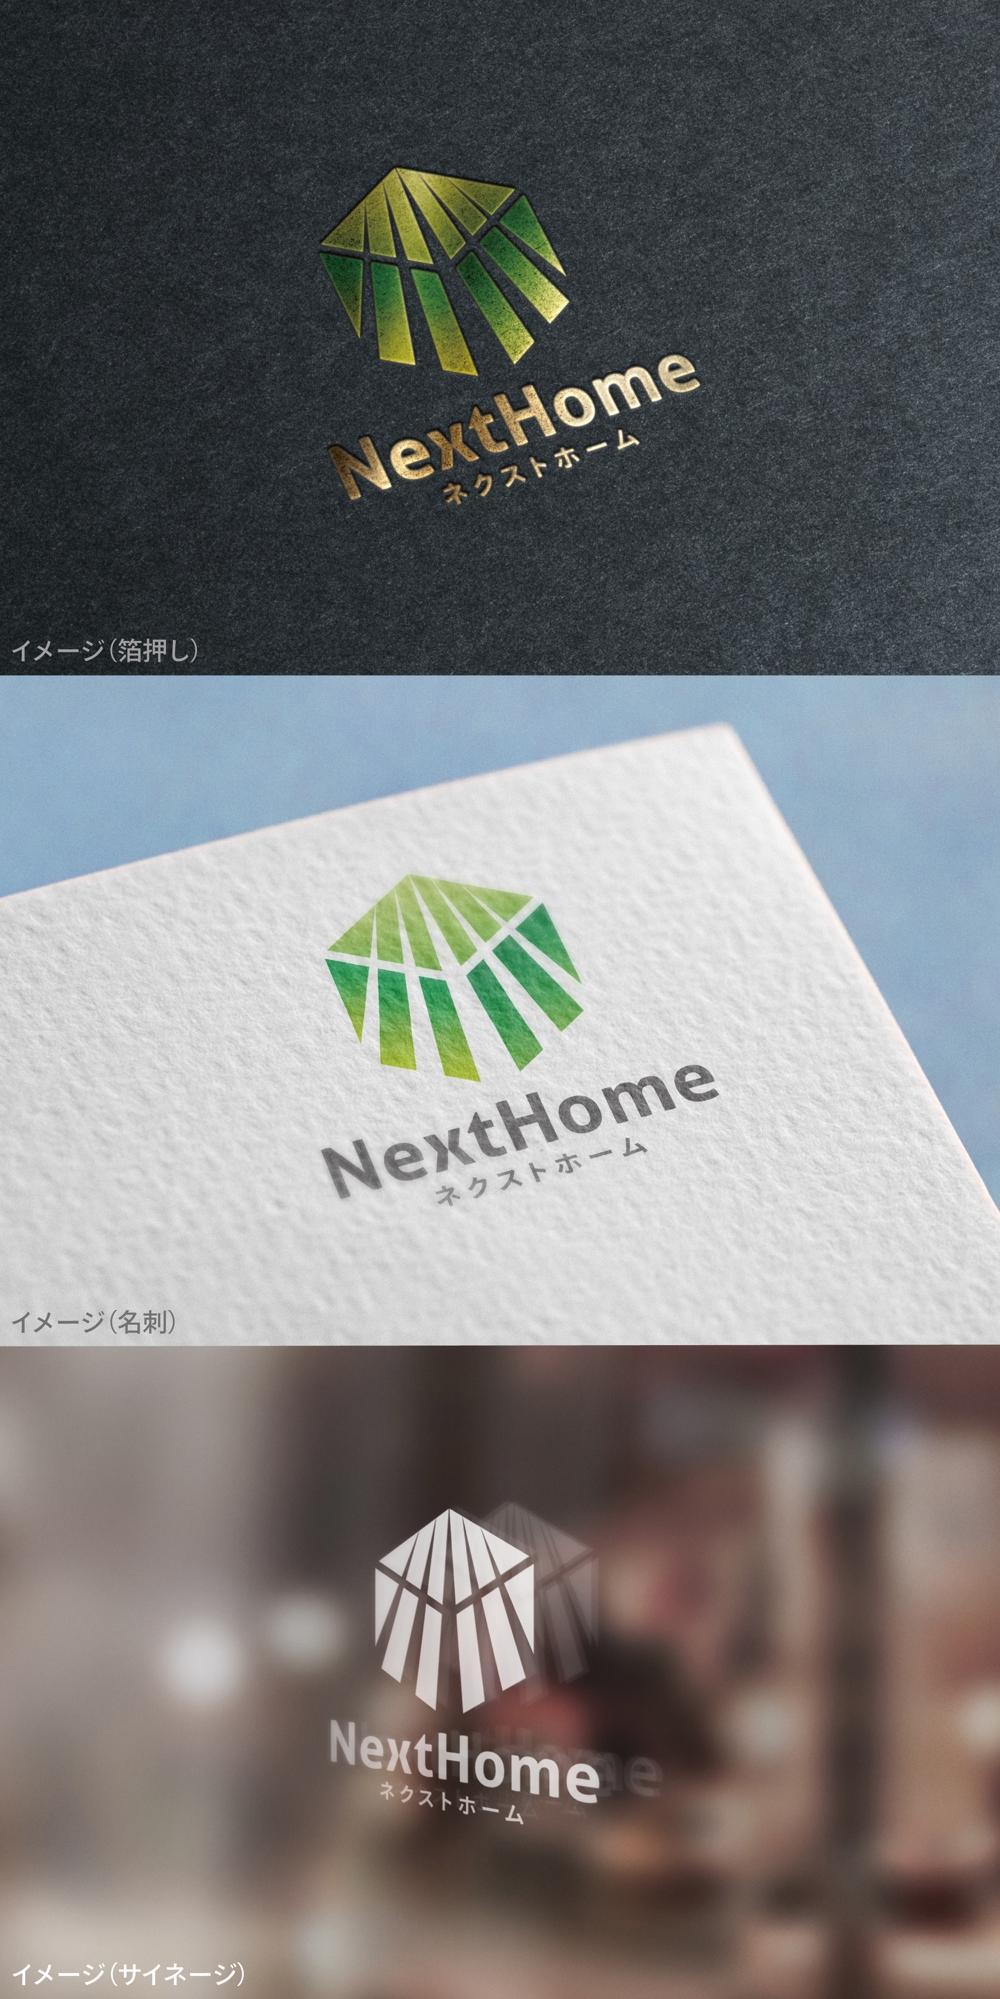 NextHome_logo01_01.jpg